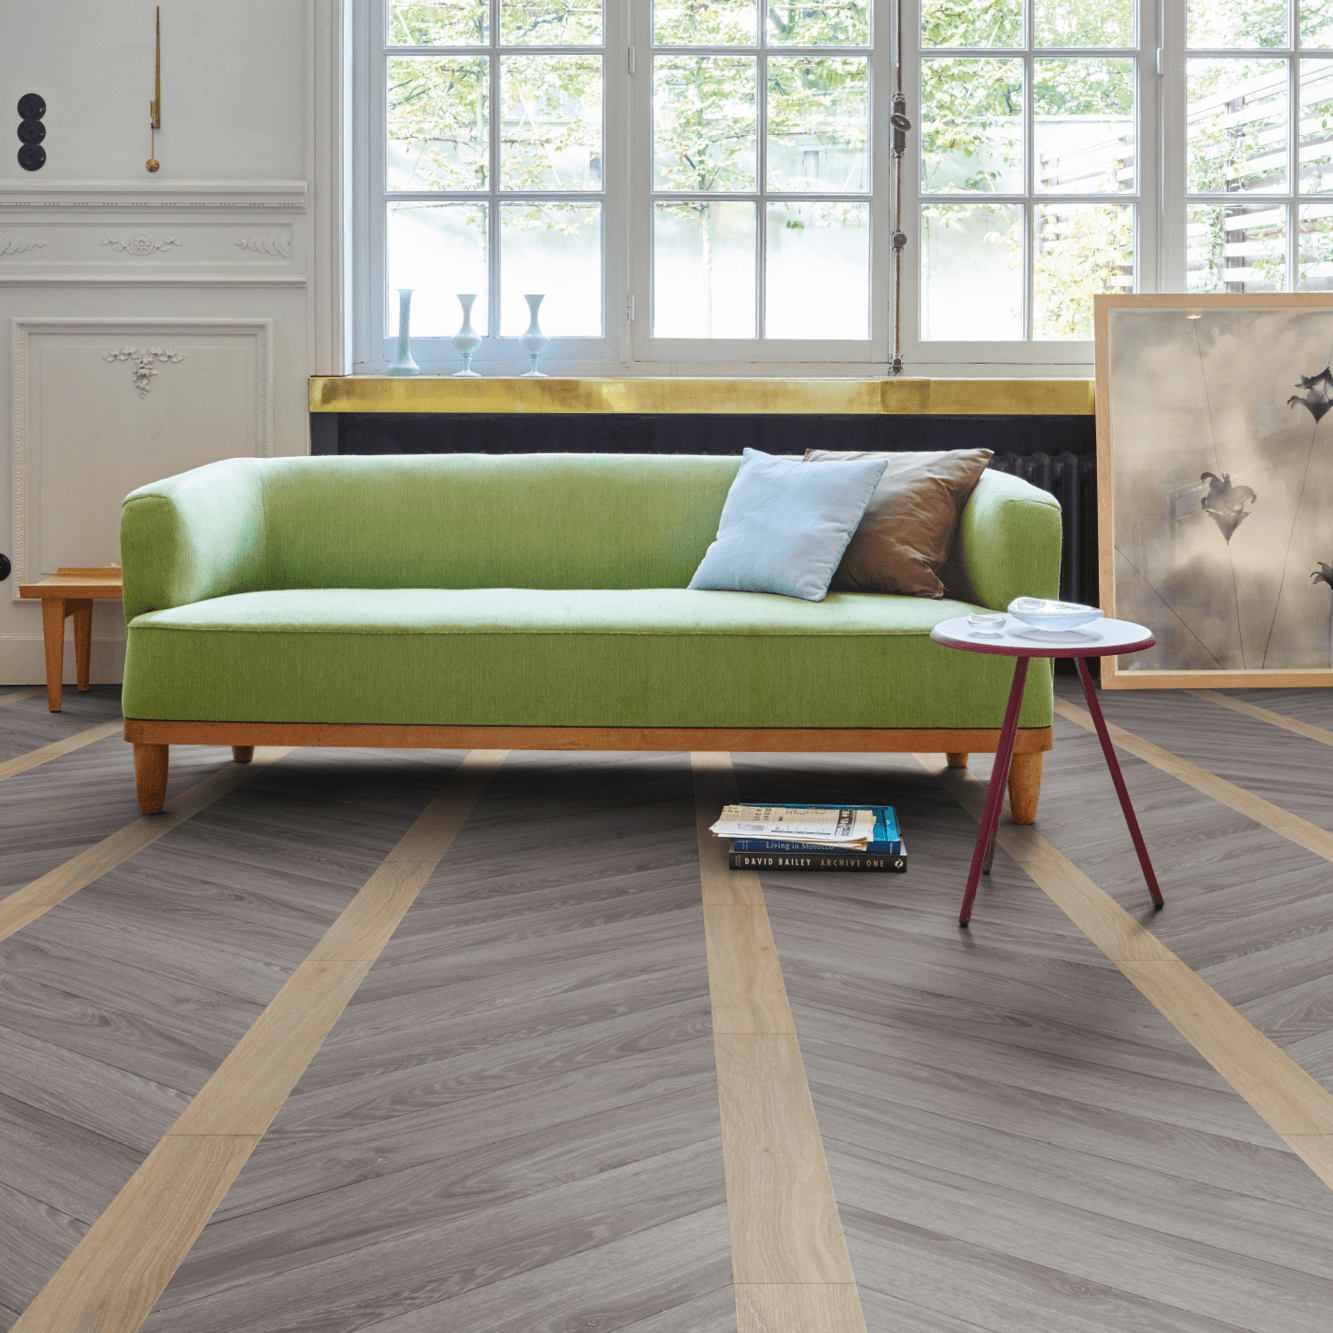 Moduleo - Luxury Vinyl Flooring - Chevron history - green sofa on a floor in wood-effect chevron pattern